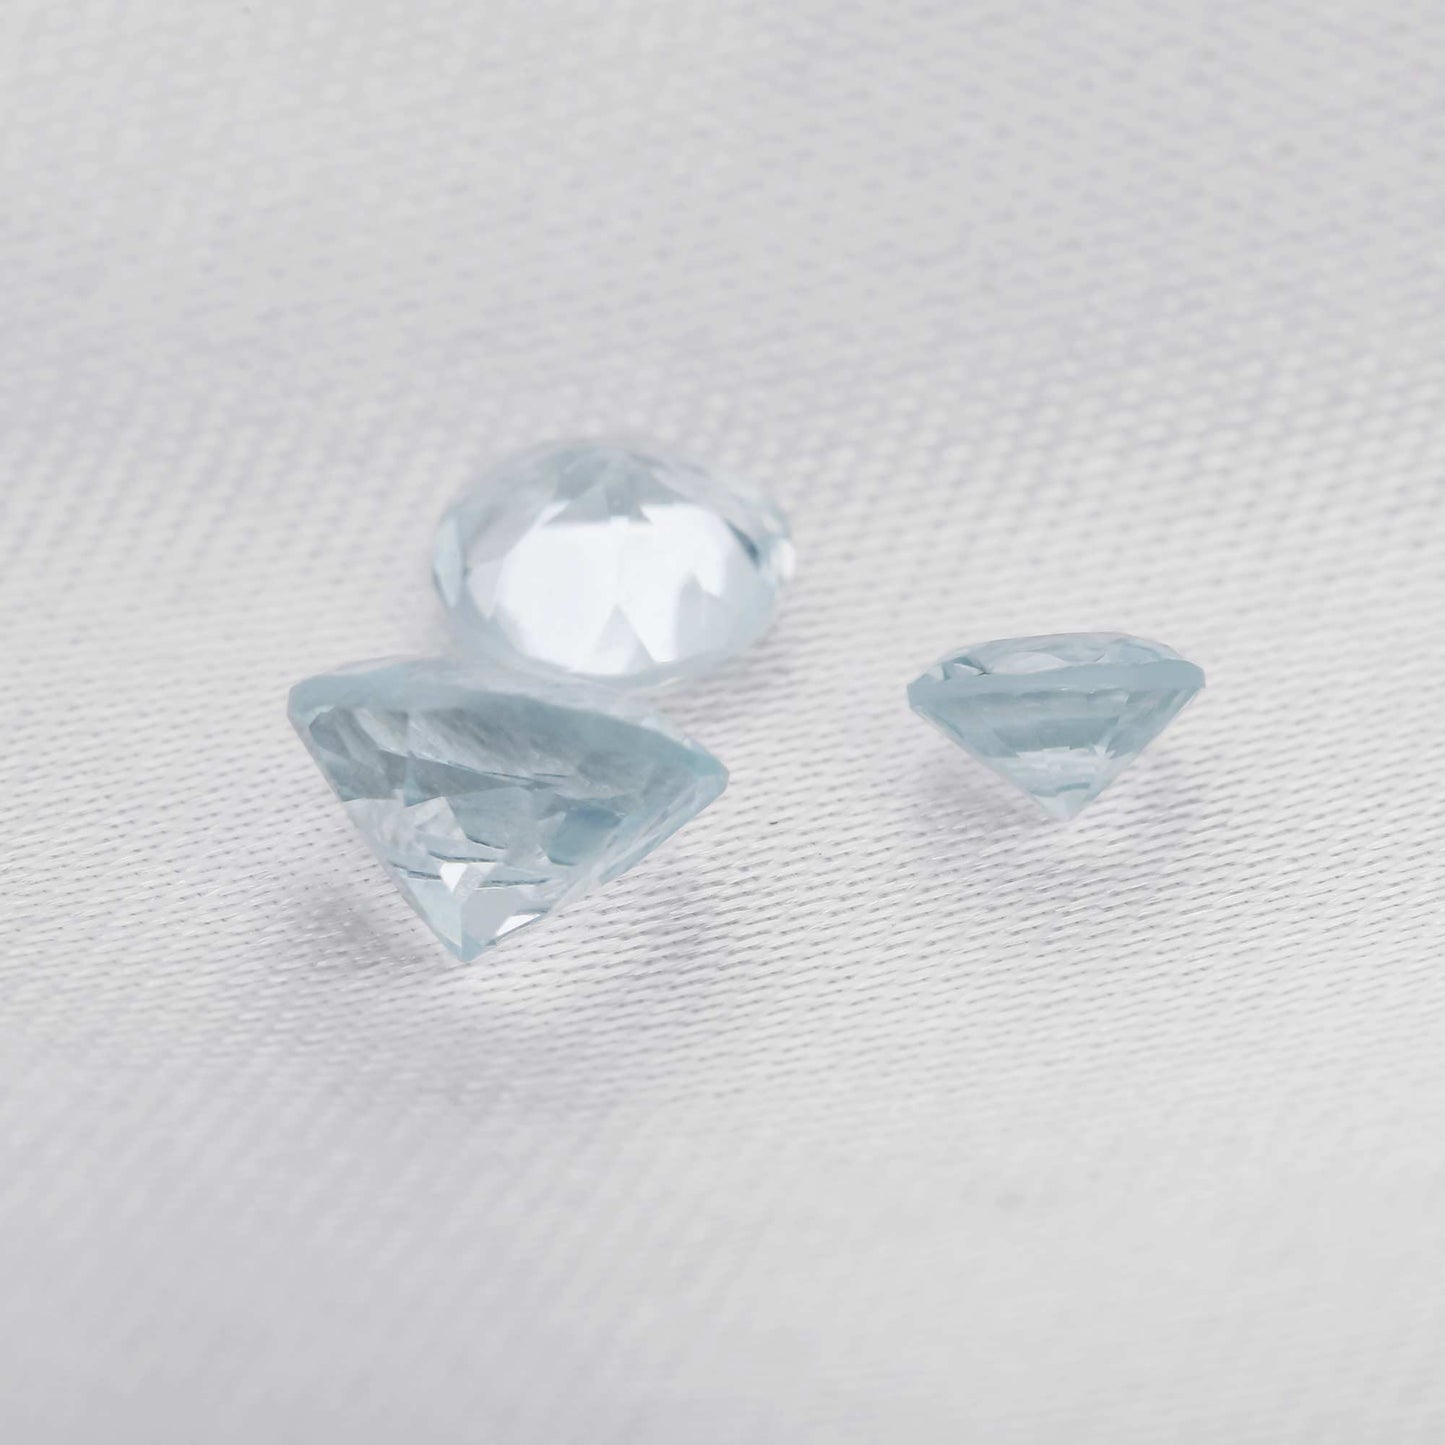 3 round cut light blue aquamarine gems.